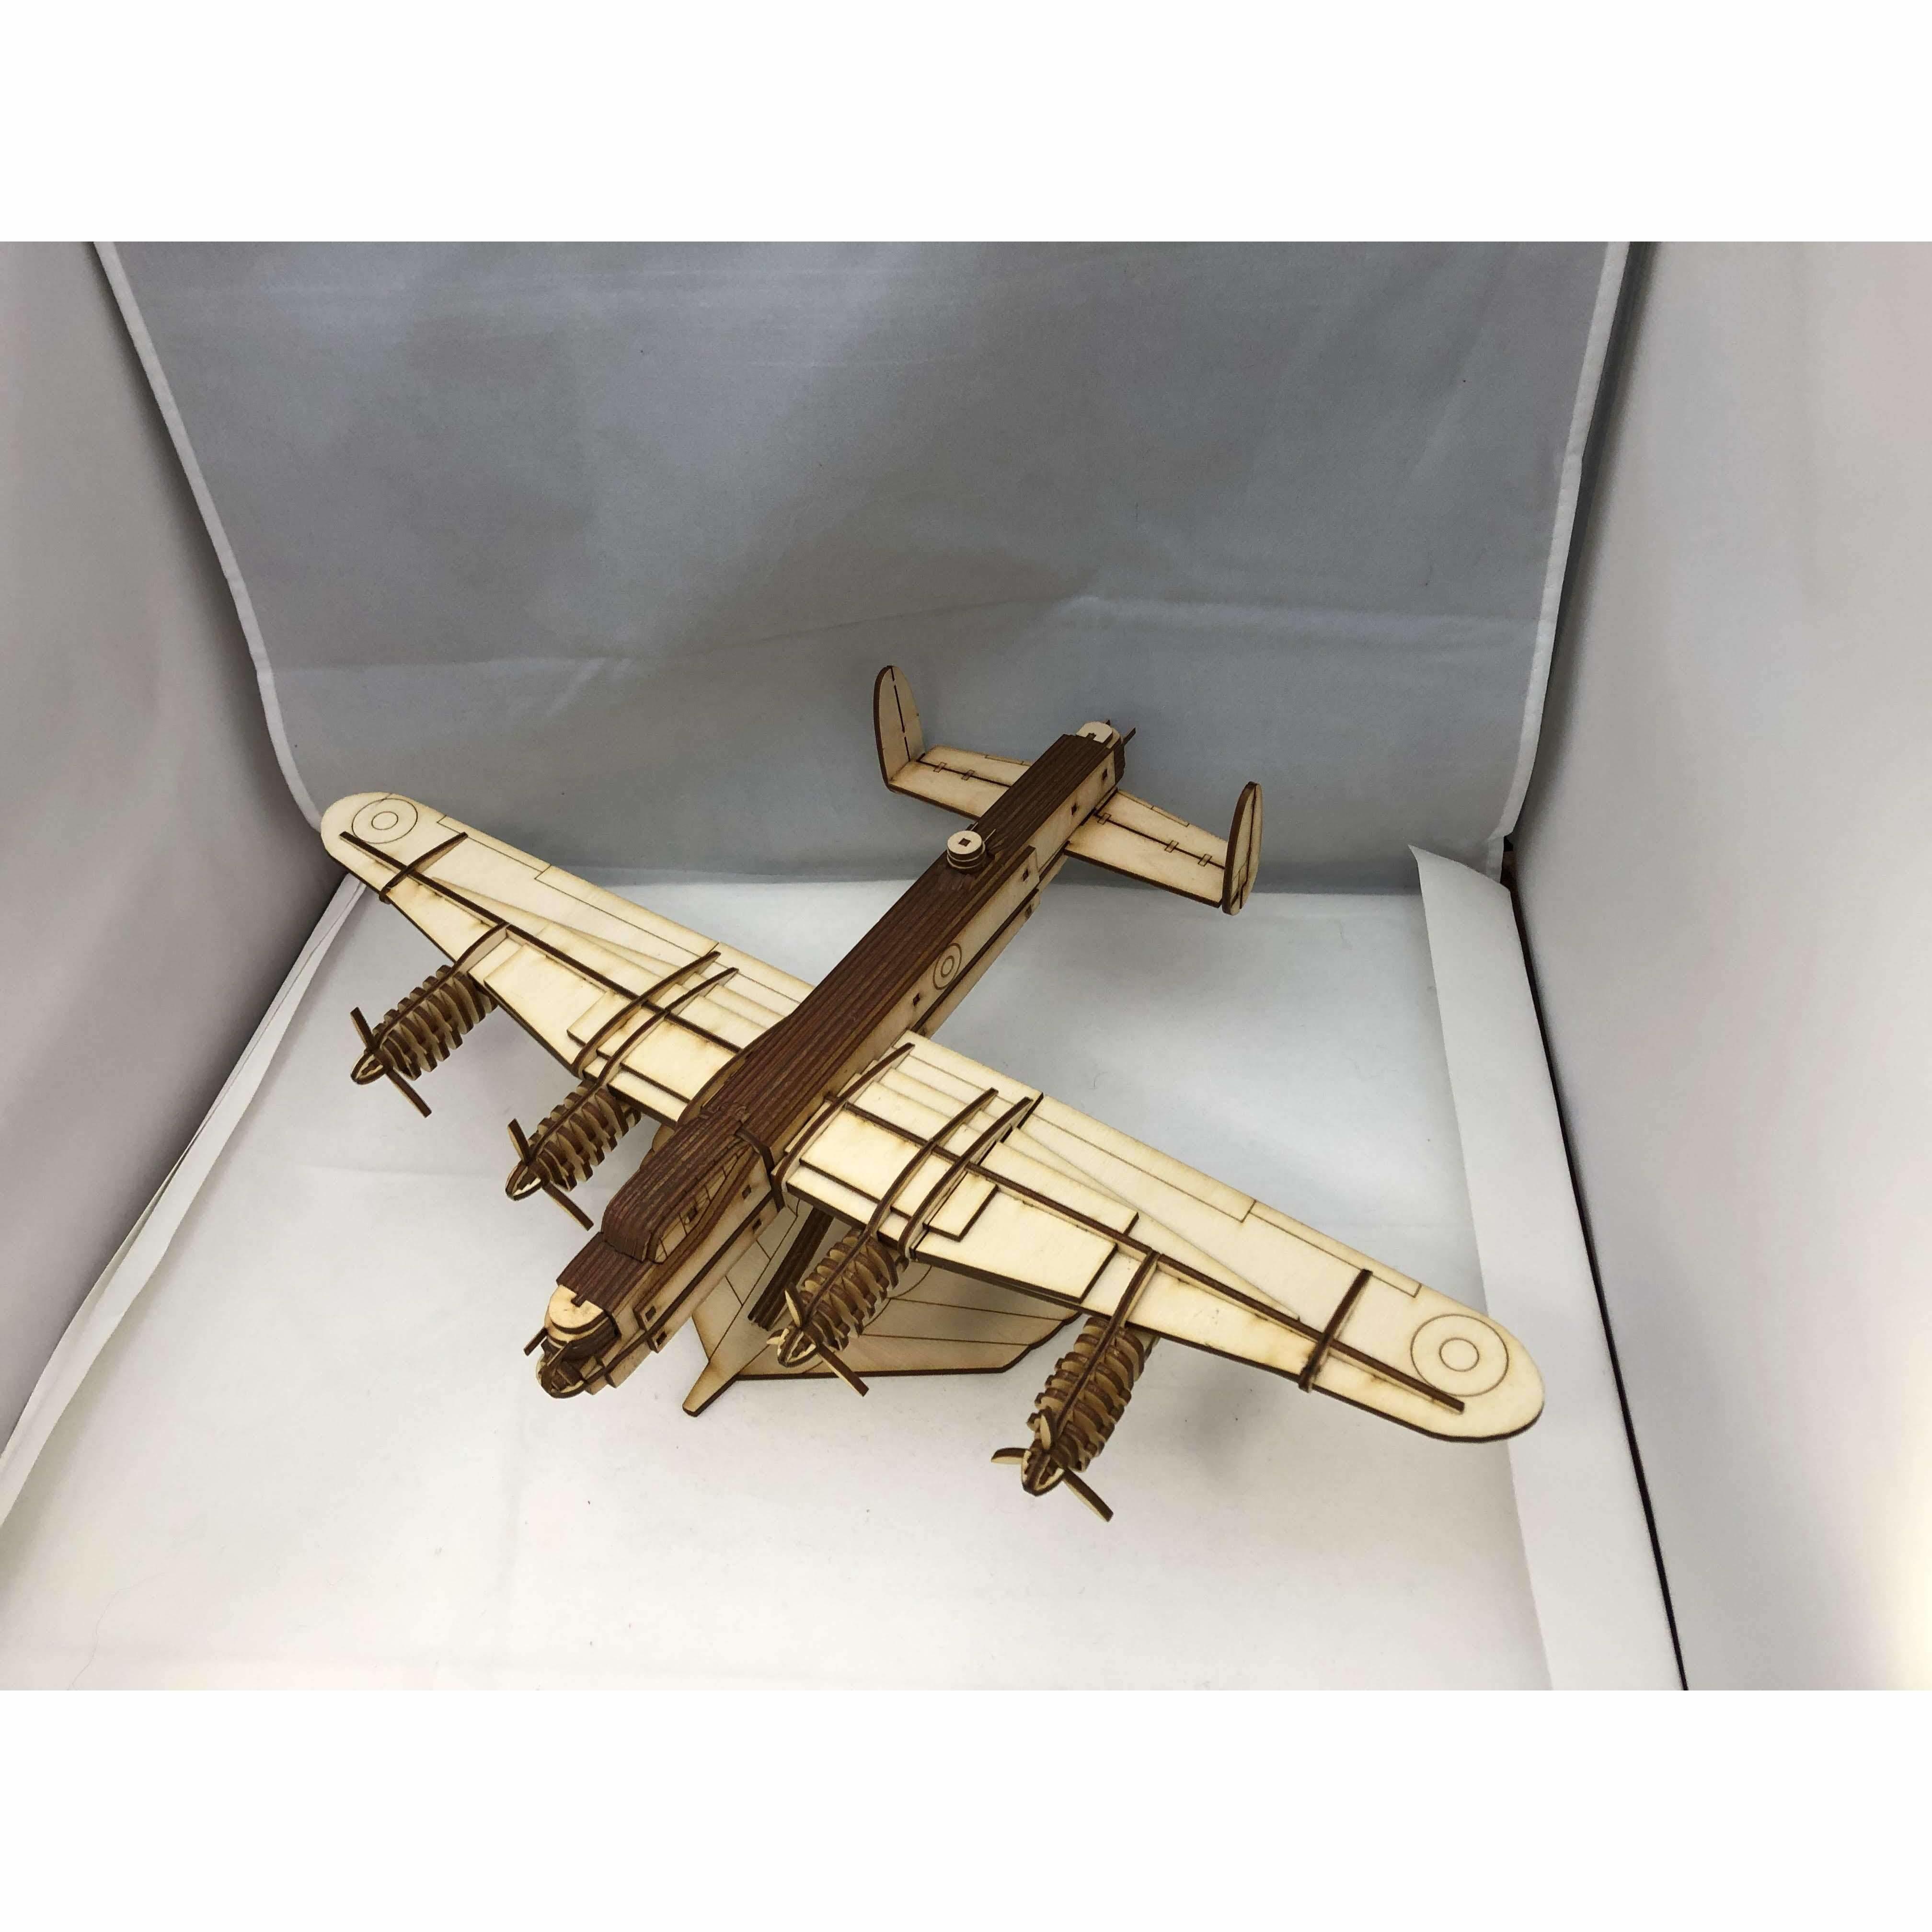 Red Berry Crafts Ltd:Avro Lancaster Model Kit